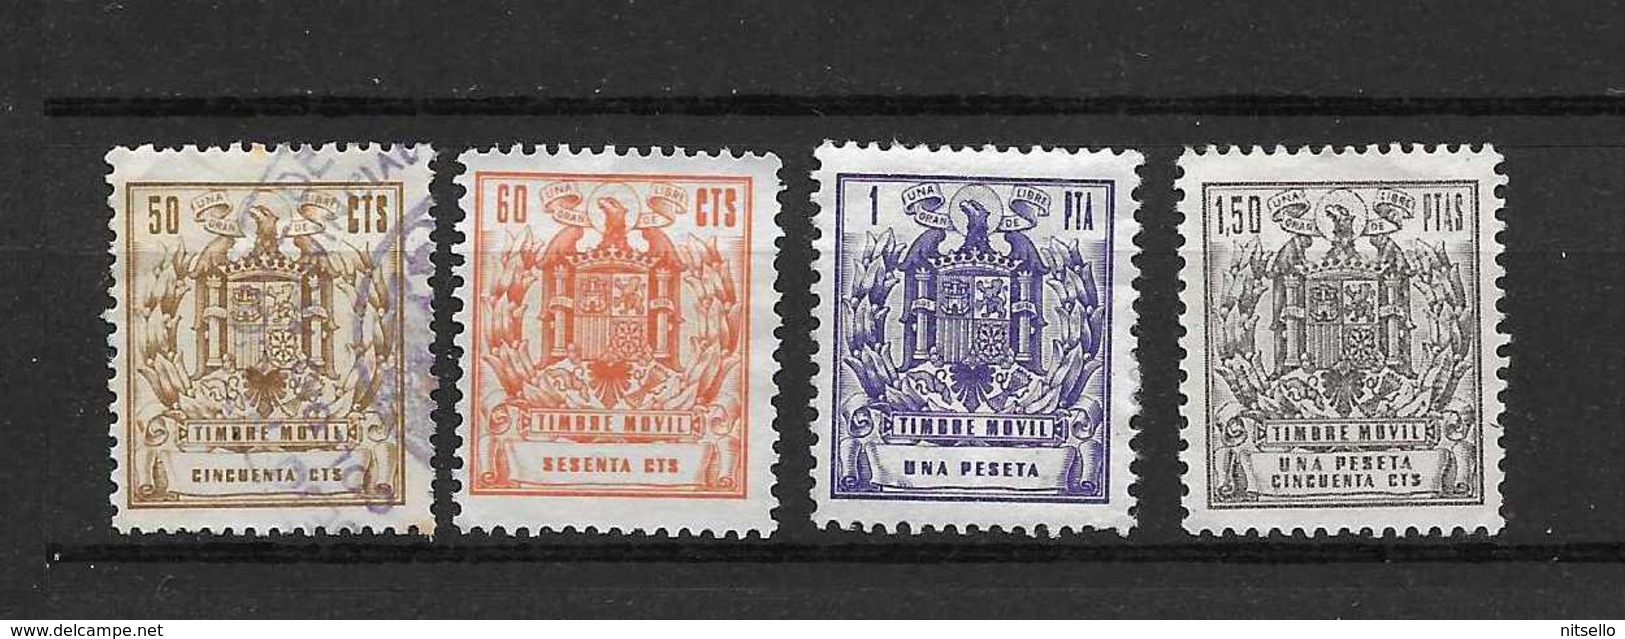 LOTE 1891 C  ///  ESPAÑA  FISCALES -  TIMBRE  MOVIL - Revenue Stamps